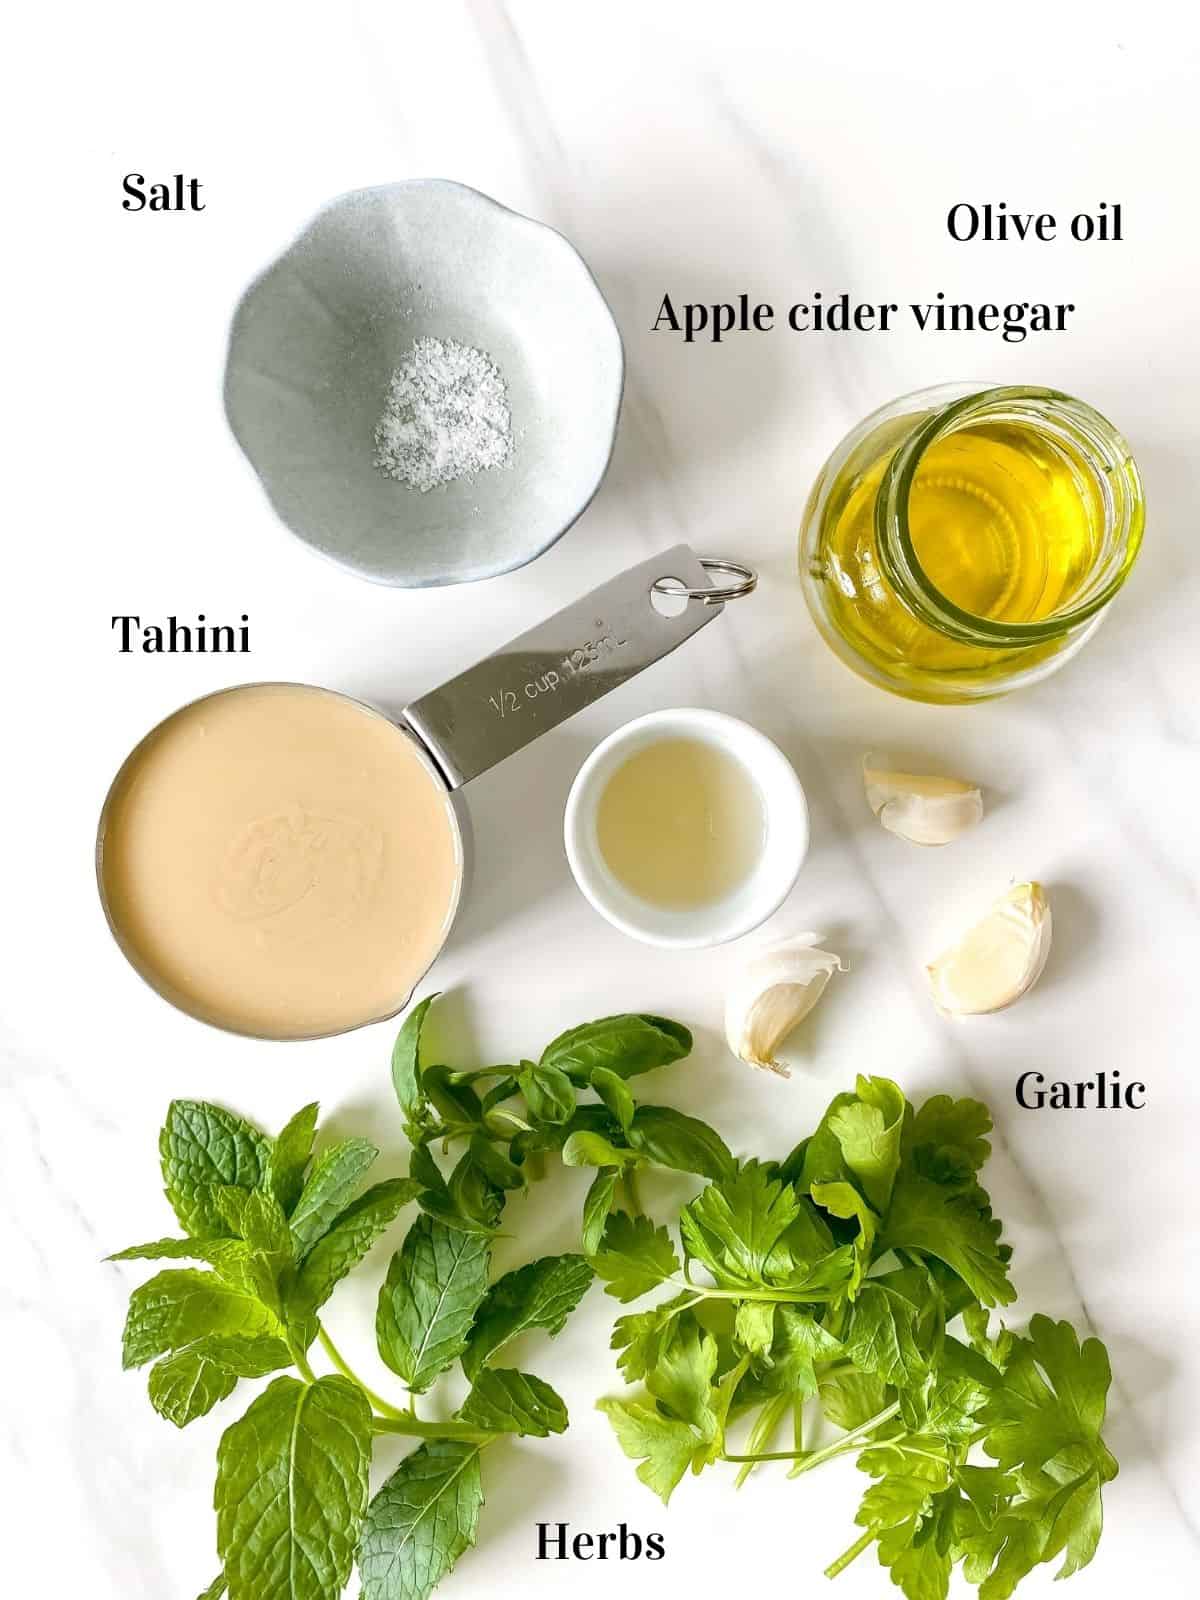 salt, olive oil, apple cider vinegar, tahini, garlic and fresh herbs.